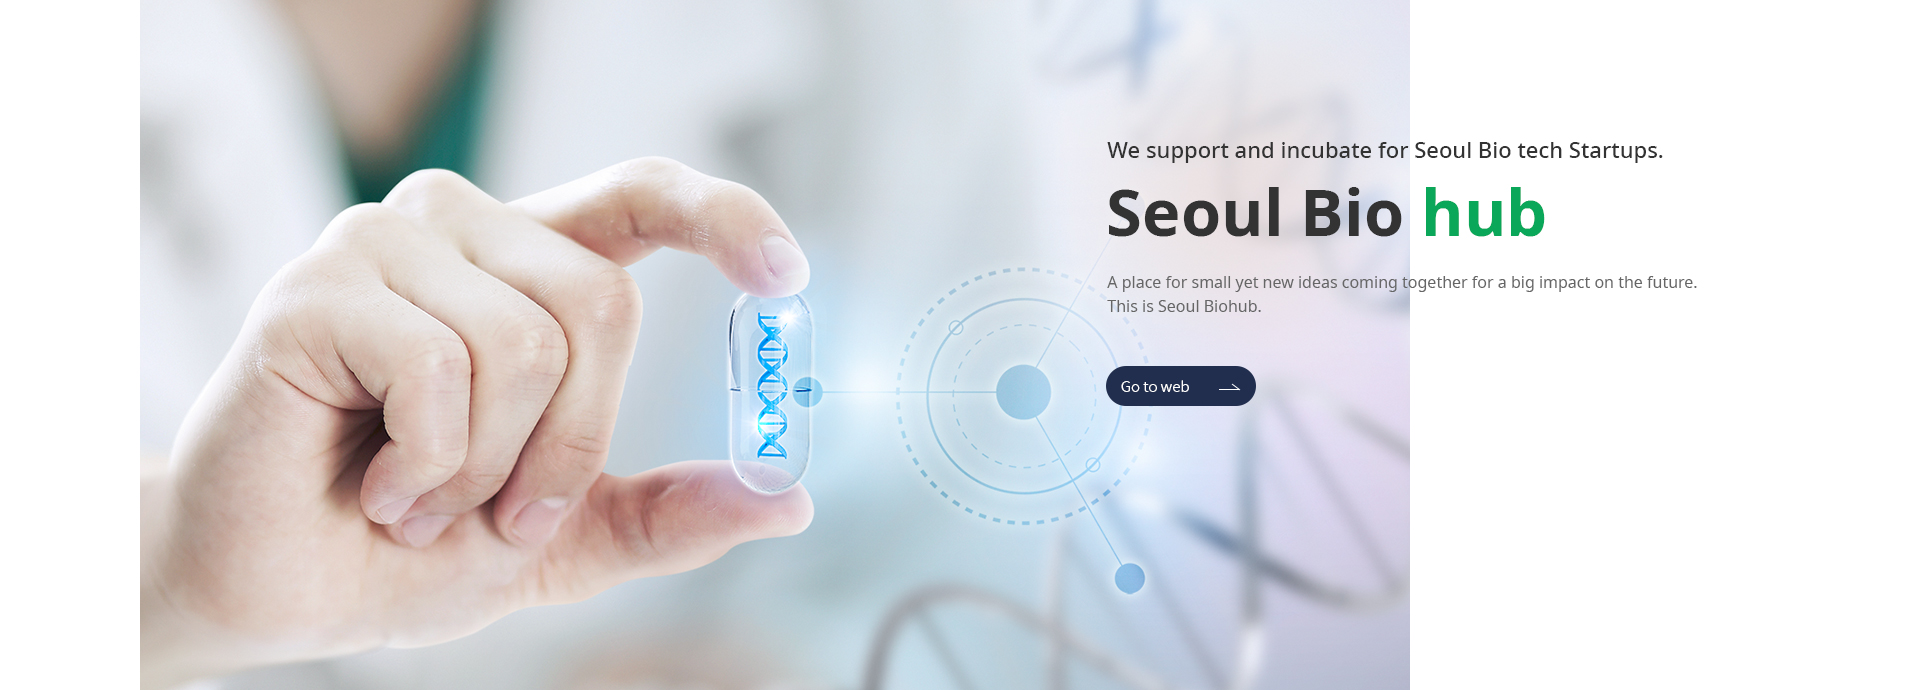 Seoul Bio hub